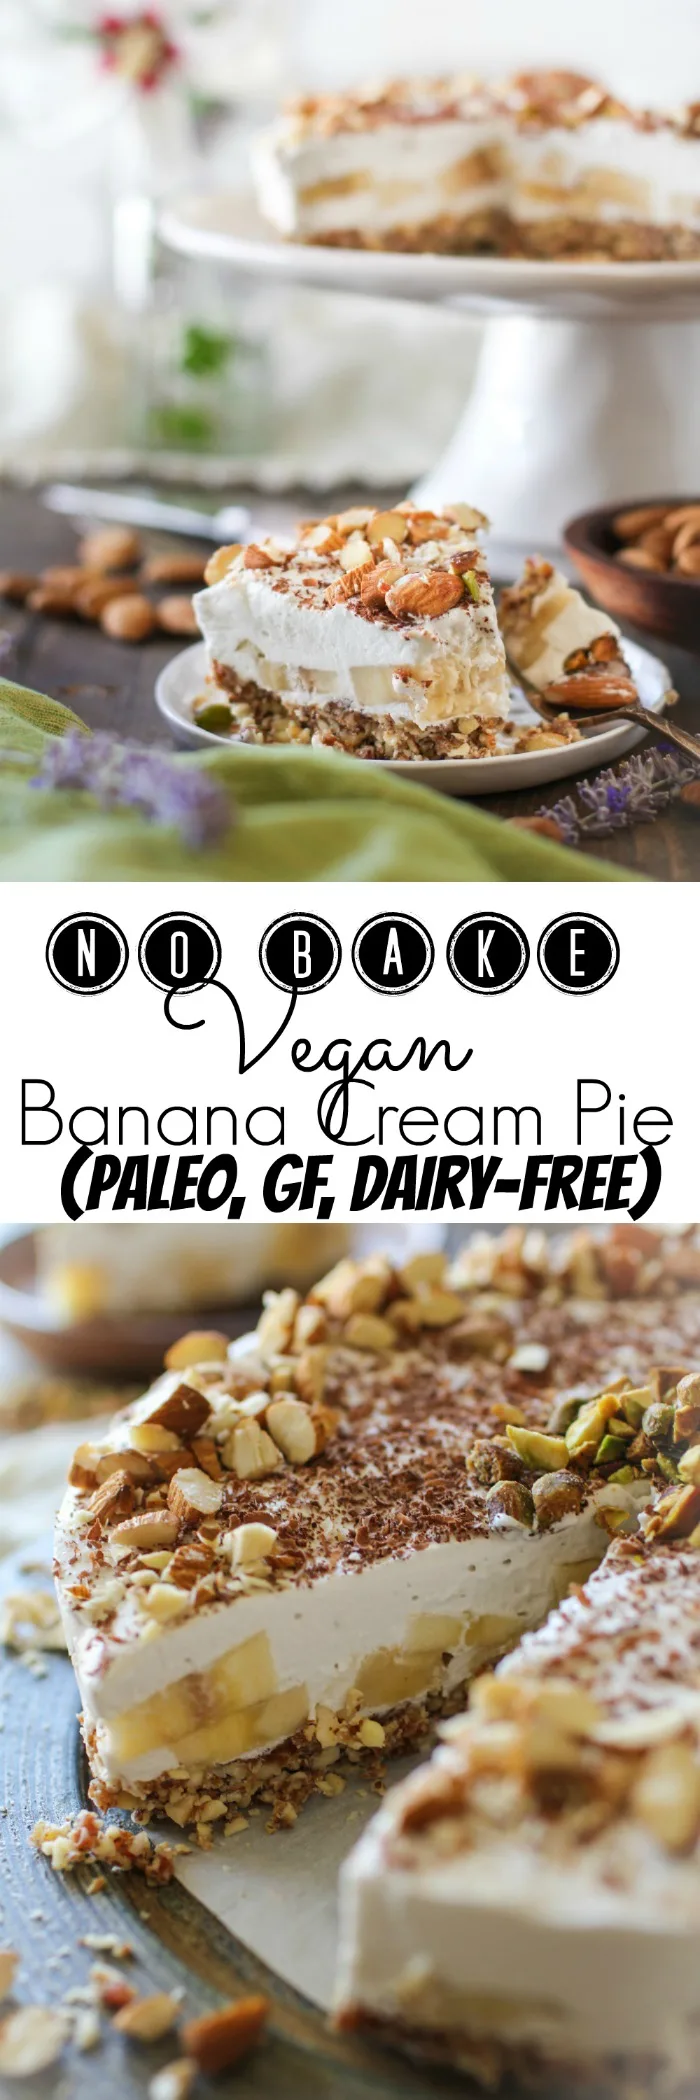 No-Bake Vegan Banana Cream Pie | TheRoastedRoot.net | A refined sugar-free gluten-free paleo dessert #healthy #vegan #recipe #dessert #dairyfree 